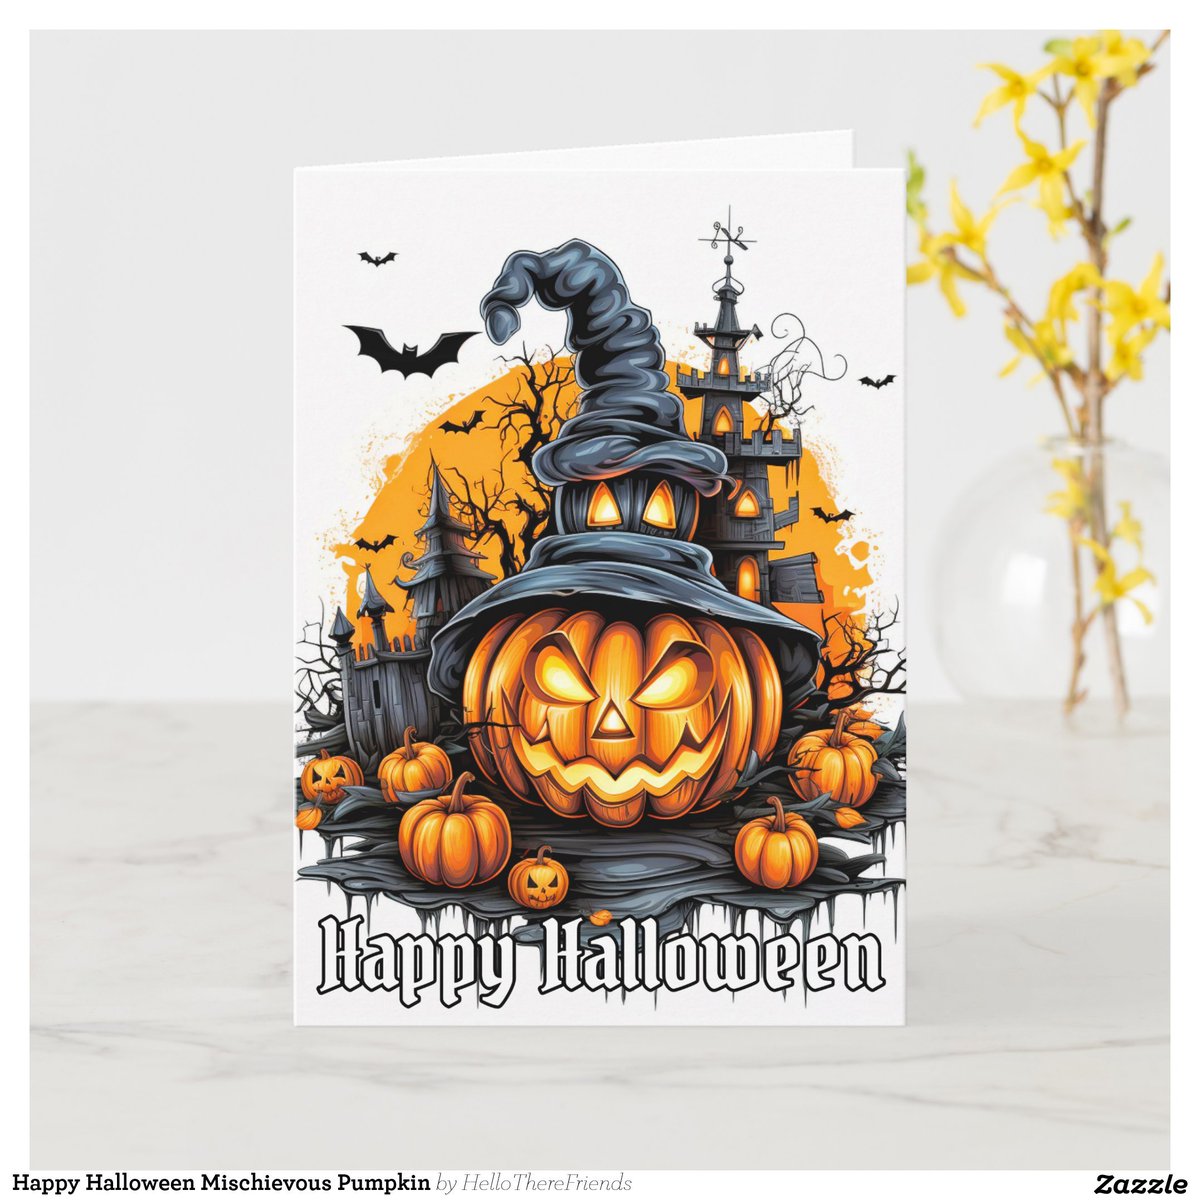 Happy Halloween Mischievous Pumpkin Card→zazzle.com/z/atdurzo5?rf=…

#GreetingCards #HalloweenCards #HappyHalloween #Pumpkins #Horror #HalloweenArt #TrickOrTreat #HauntedHouse #HappyHalloweenCards #Macabre